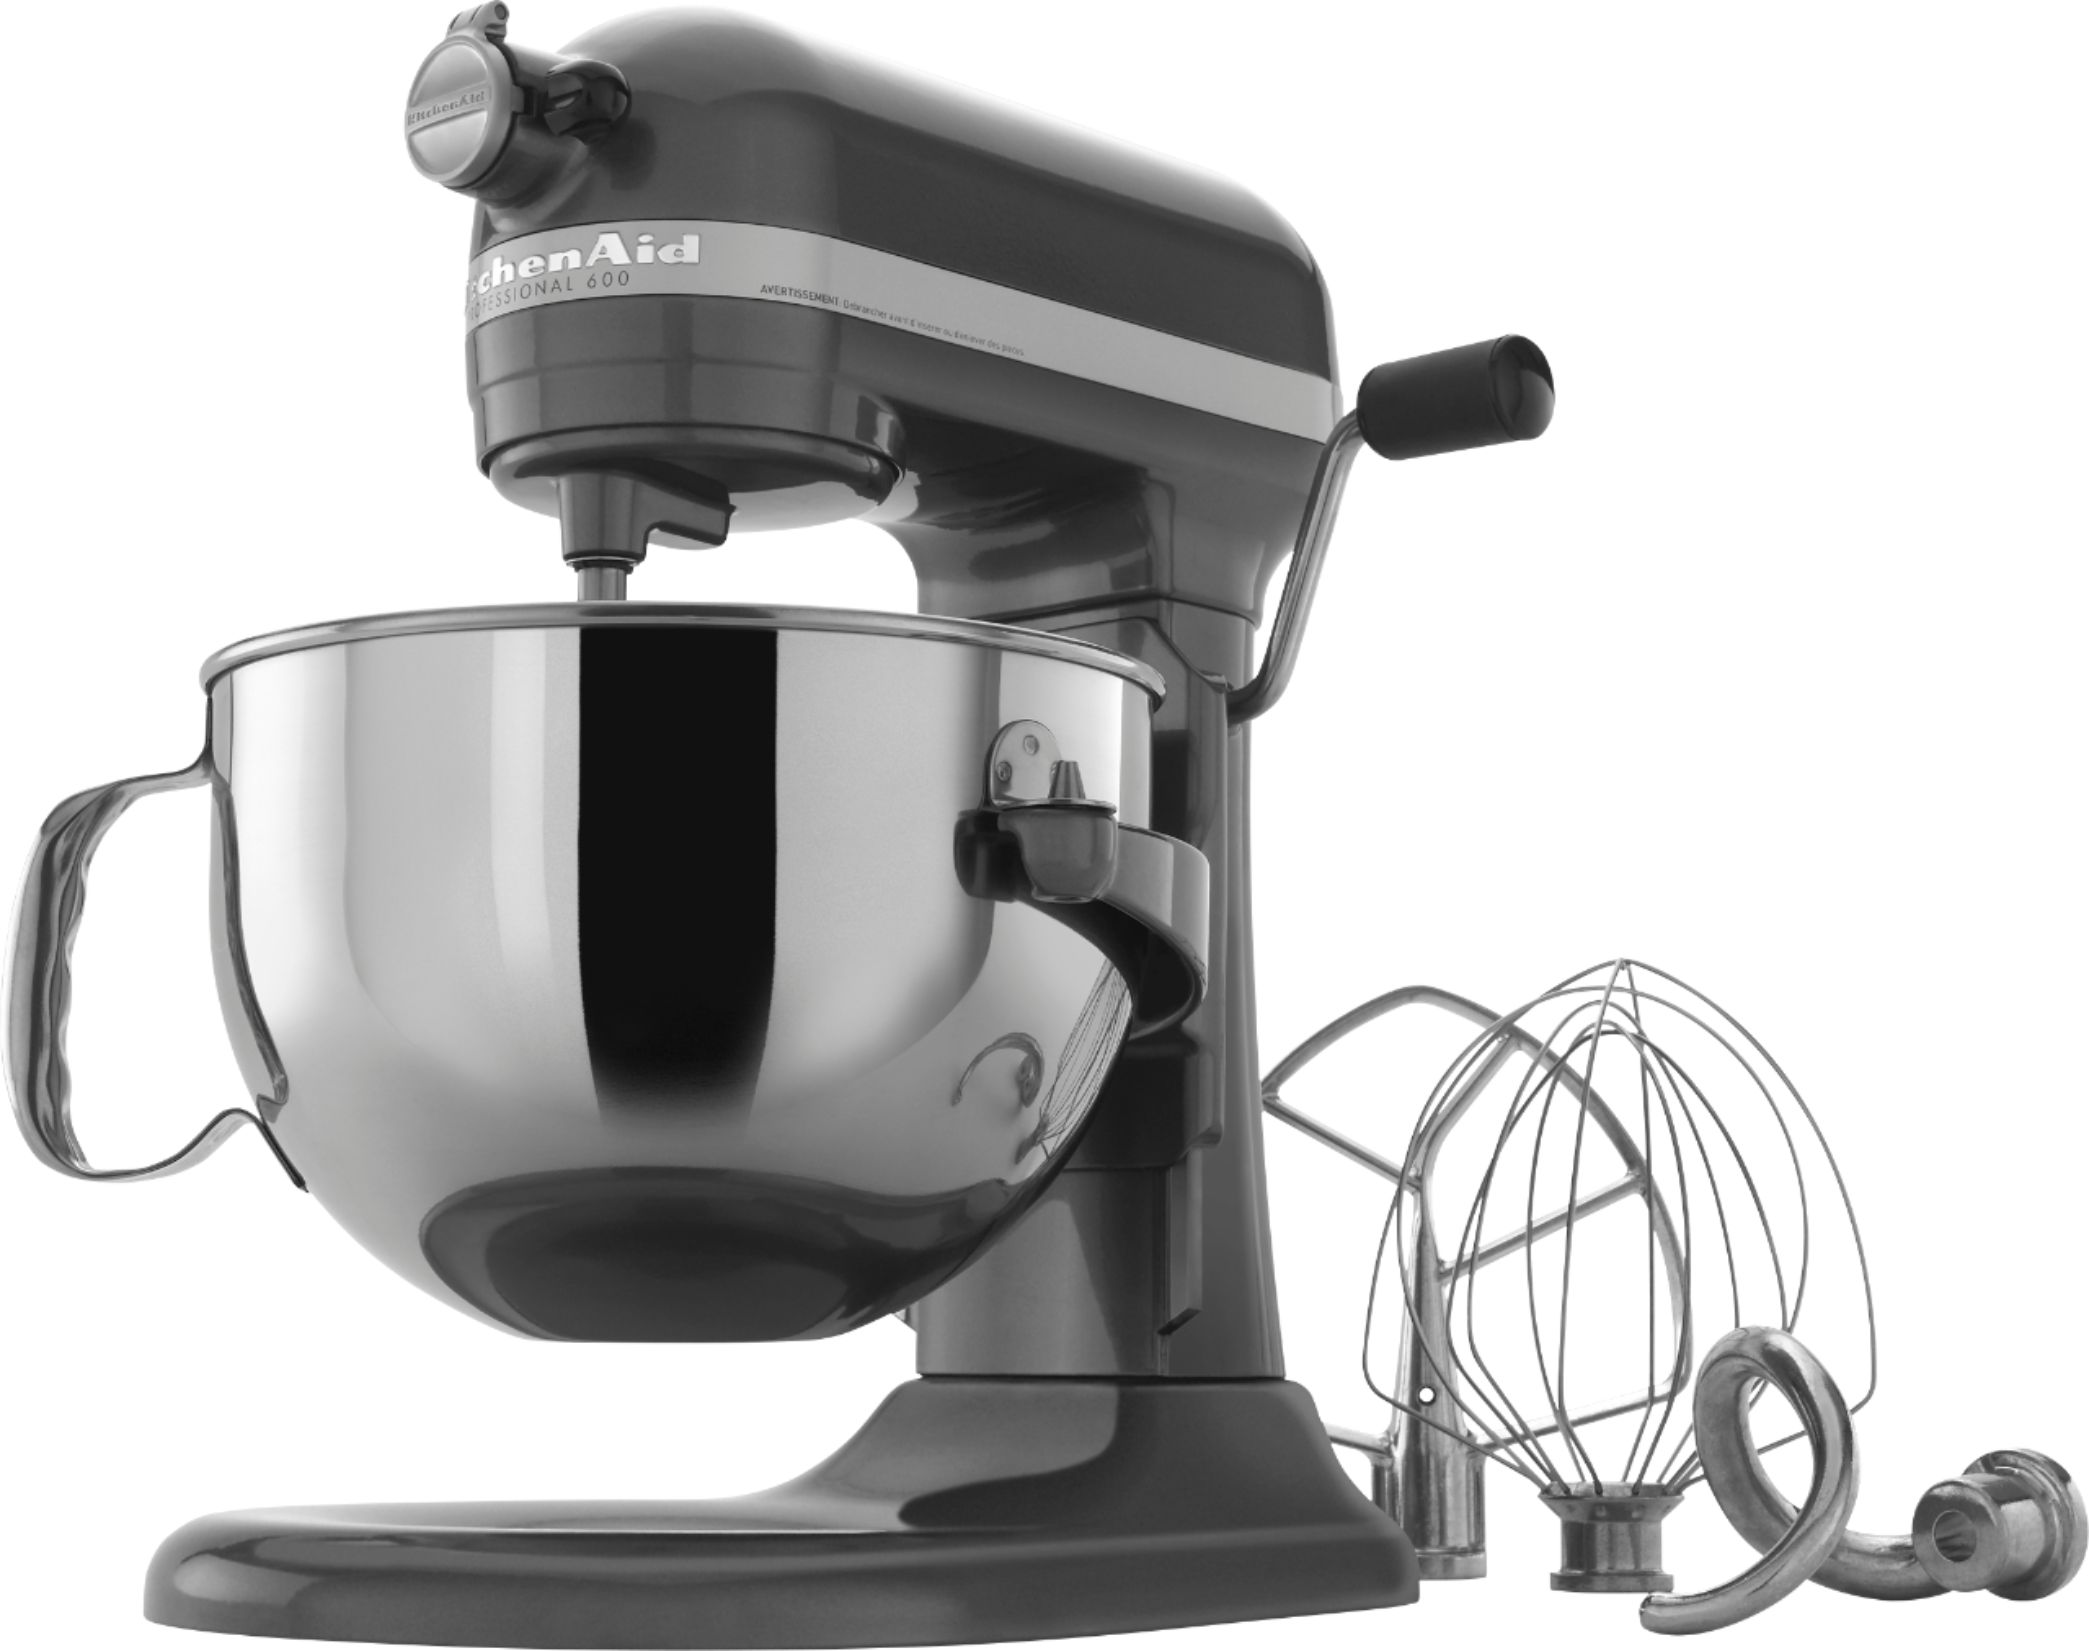 Kitchenaid Professional 600 stand mixer review 